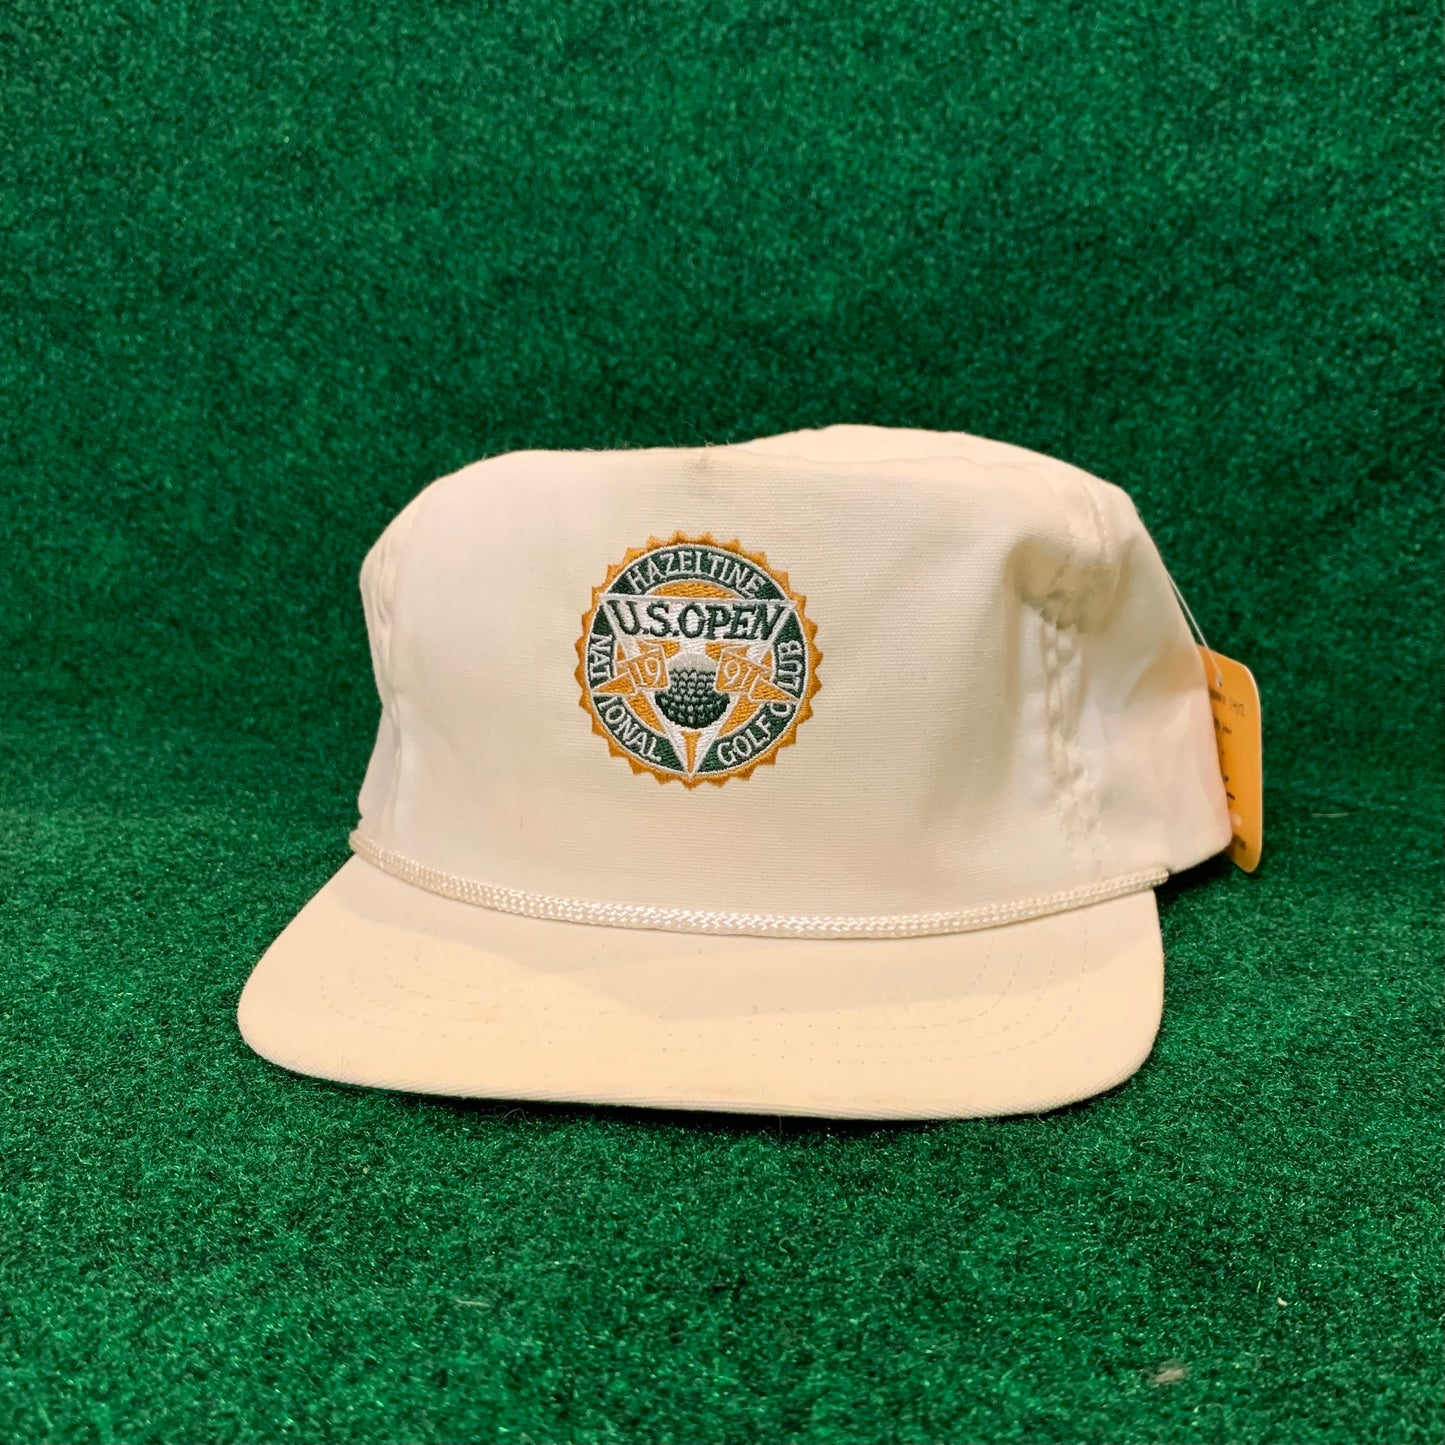 1991 US Open Hazeltine National Golf Club Hat